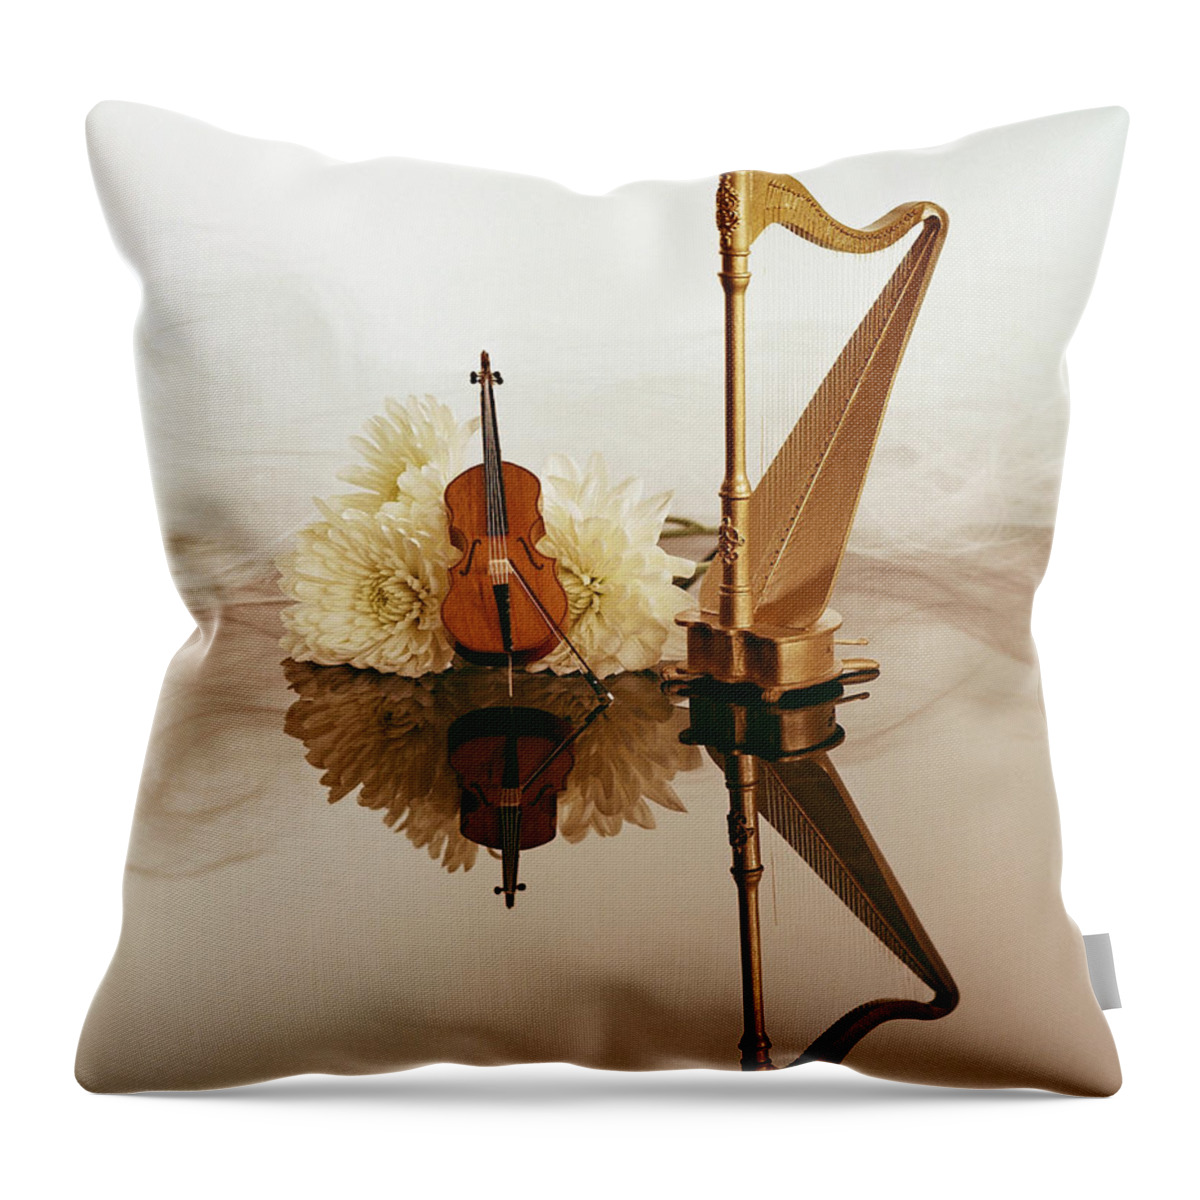 Strine Duet Throw Pillow featuring the photograph String Duet by Judi Quelland